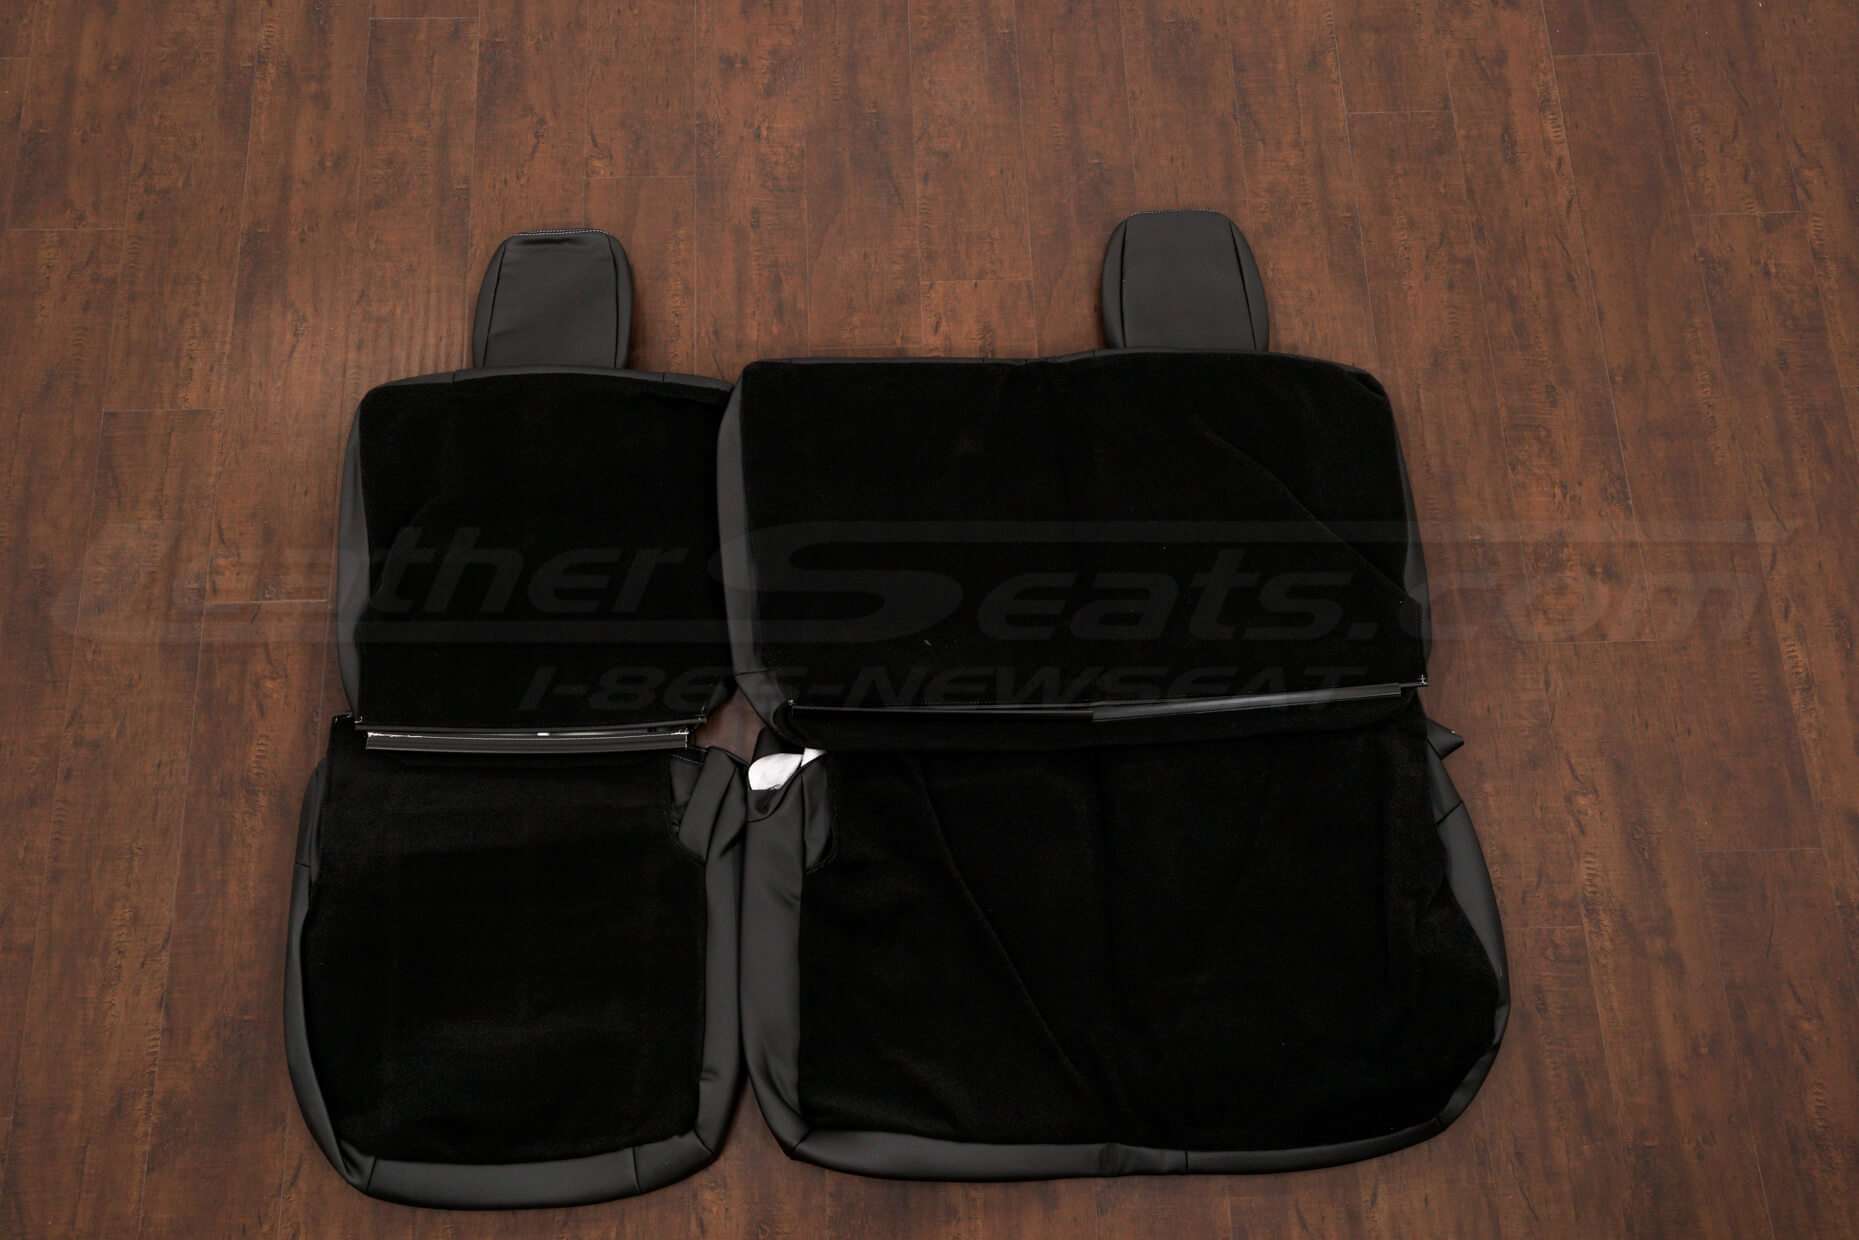 16-21 Nissan titan Leather Kit - Black - Back view of rear seats